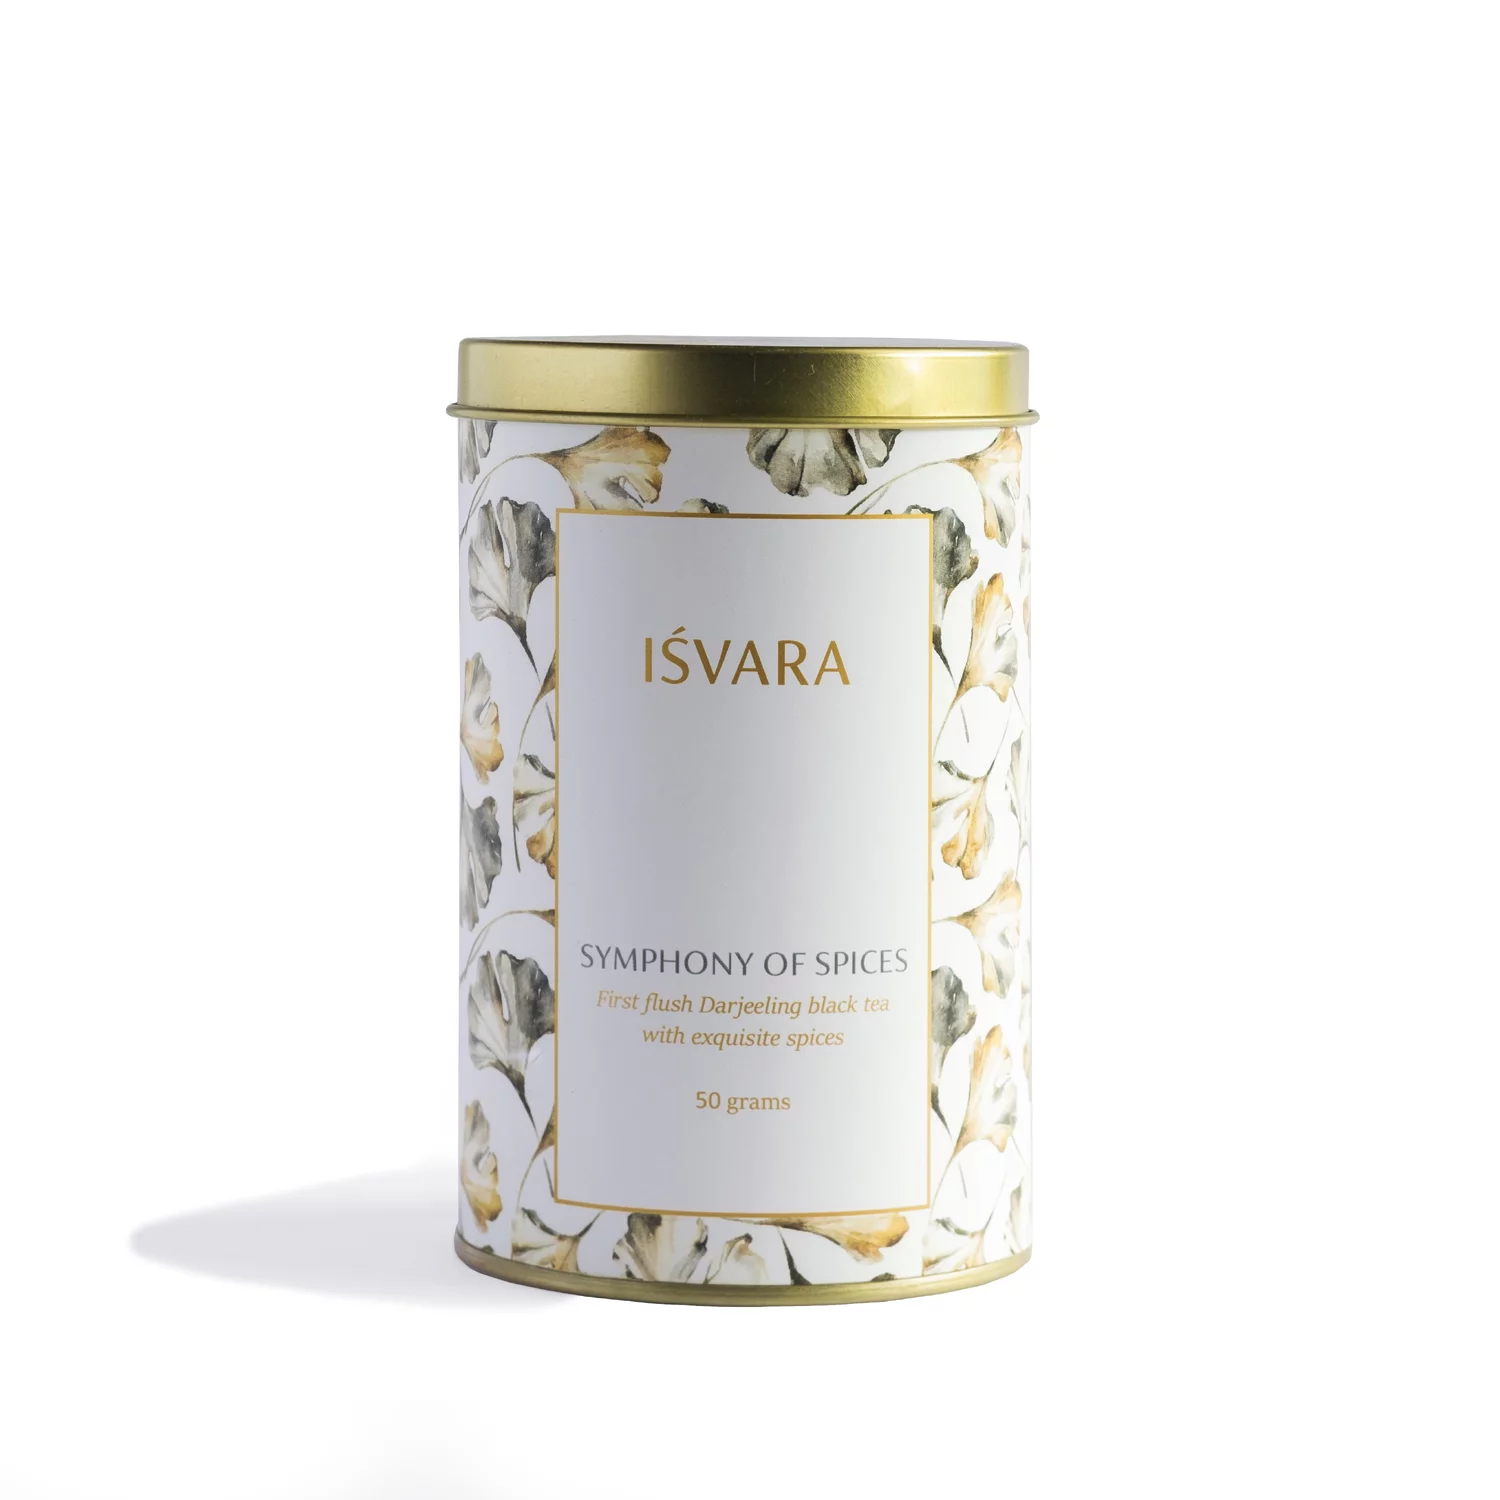 Isvara Spiced Black Tea | Symphony of Spices (30 Servings, 50 gms)